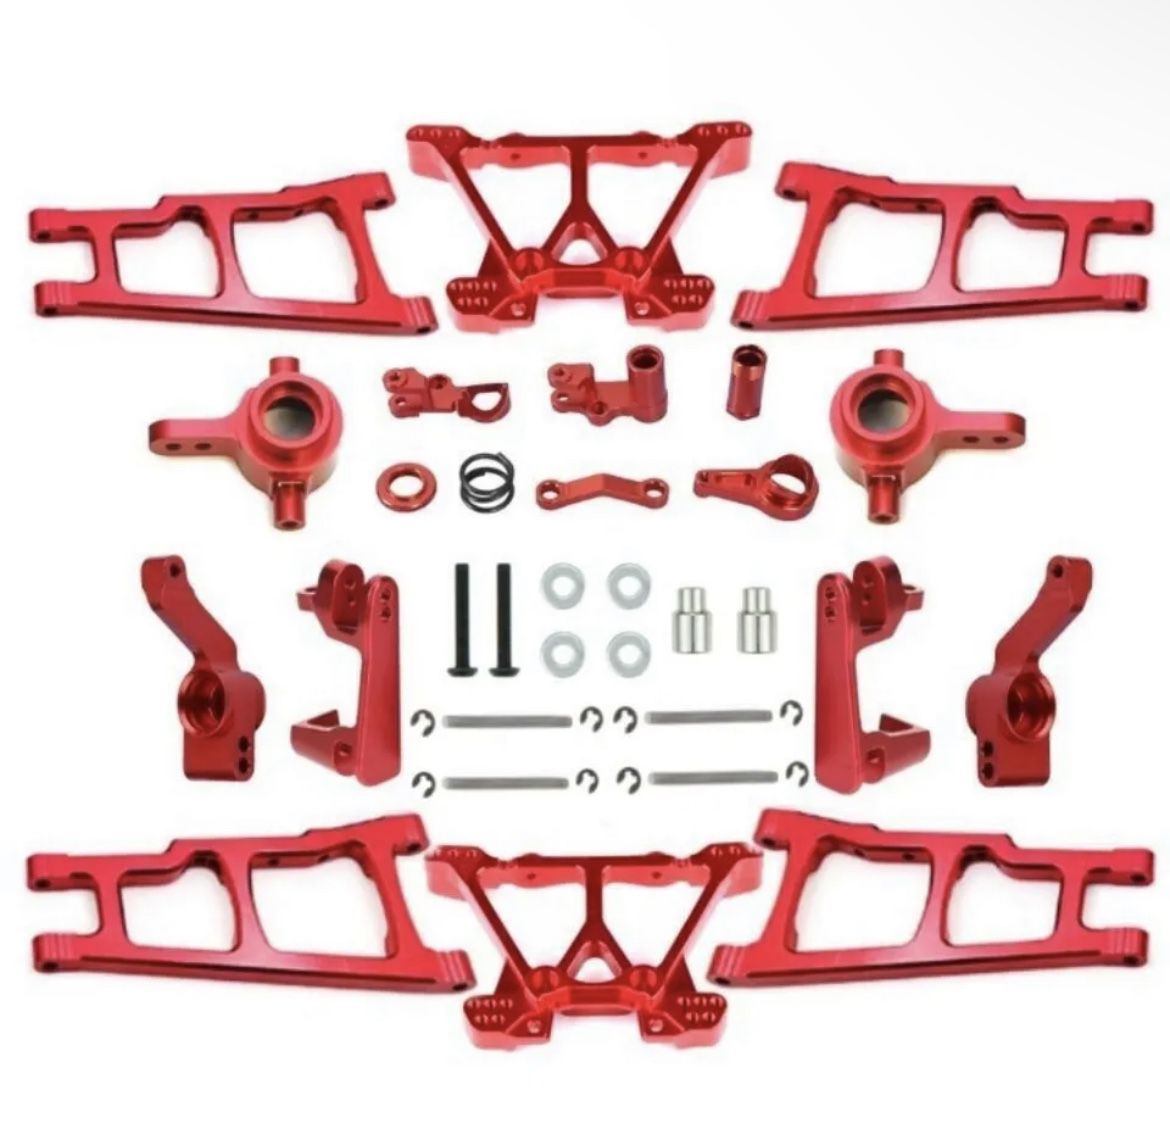 Metal Full Set For 1/10 TRAXXAS SLASH Rustler 4x4 RC Car Body Upgrade Parts Kits